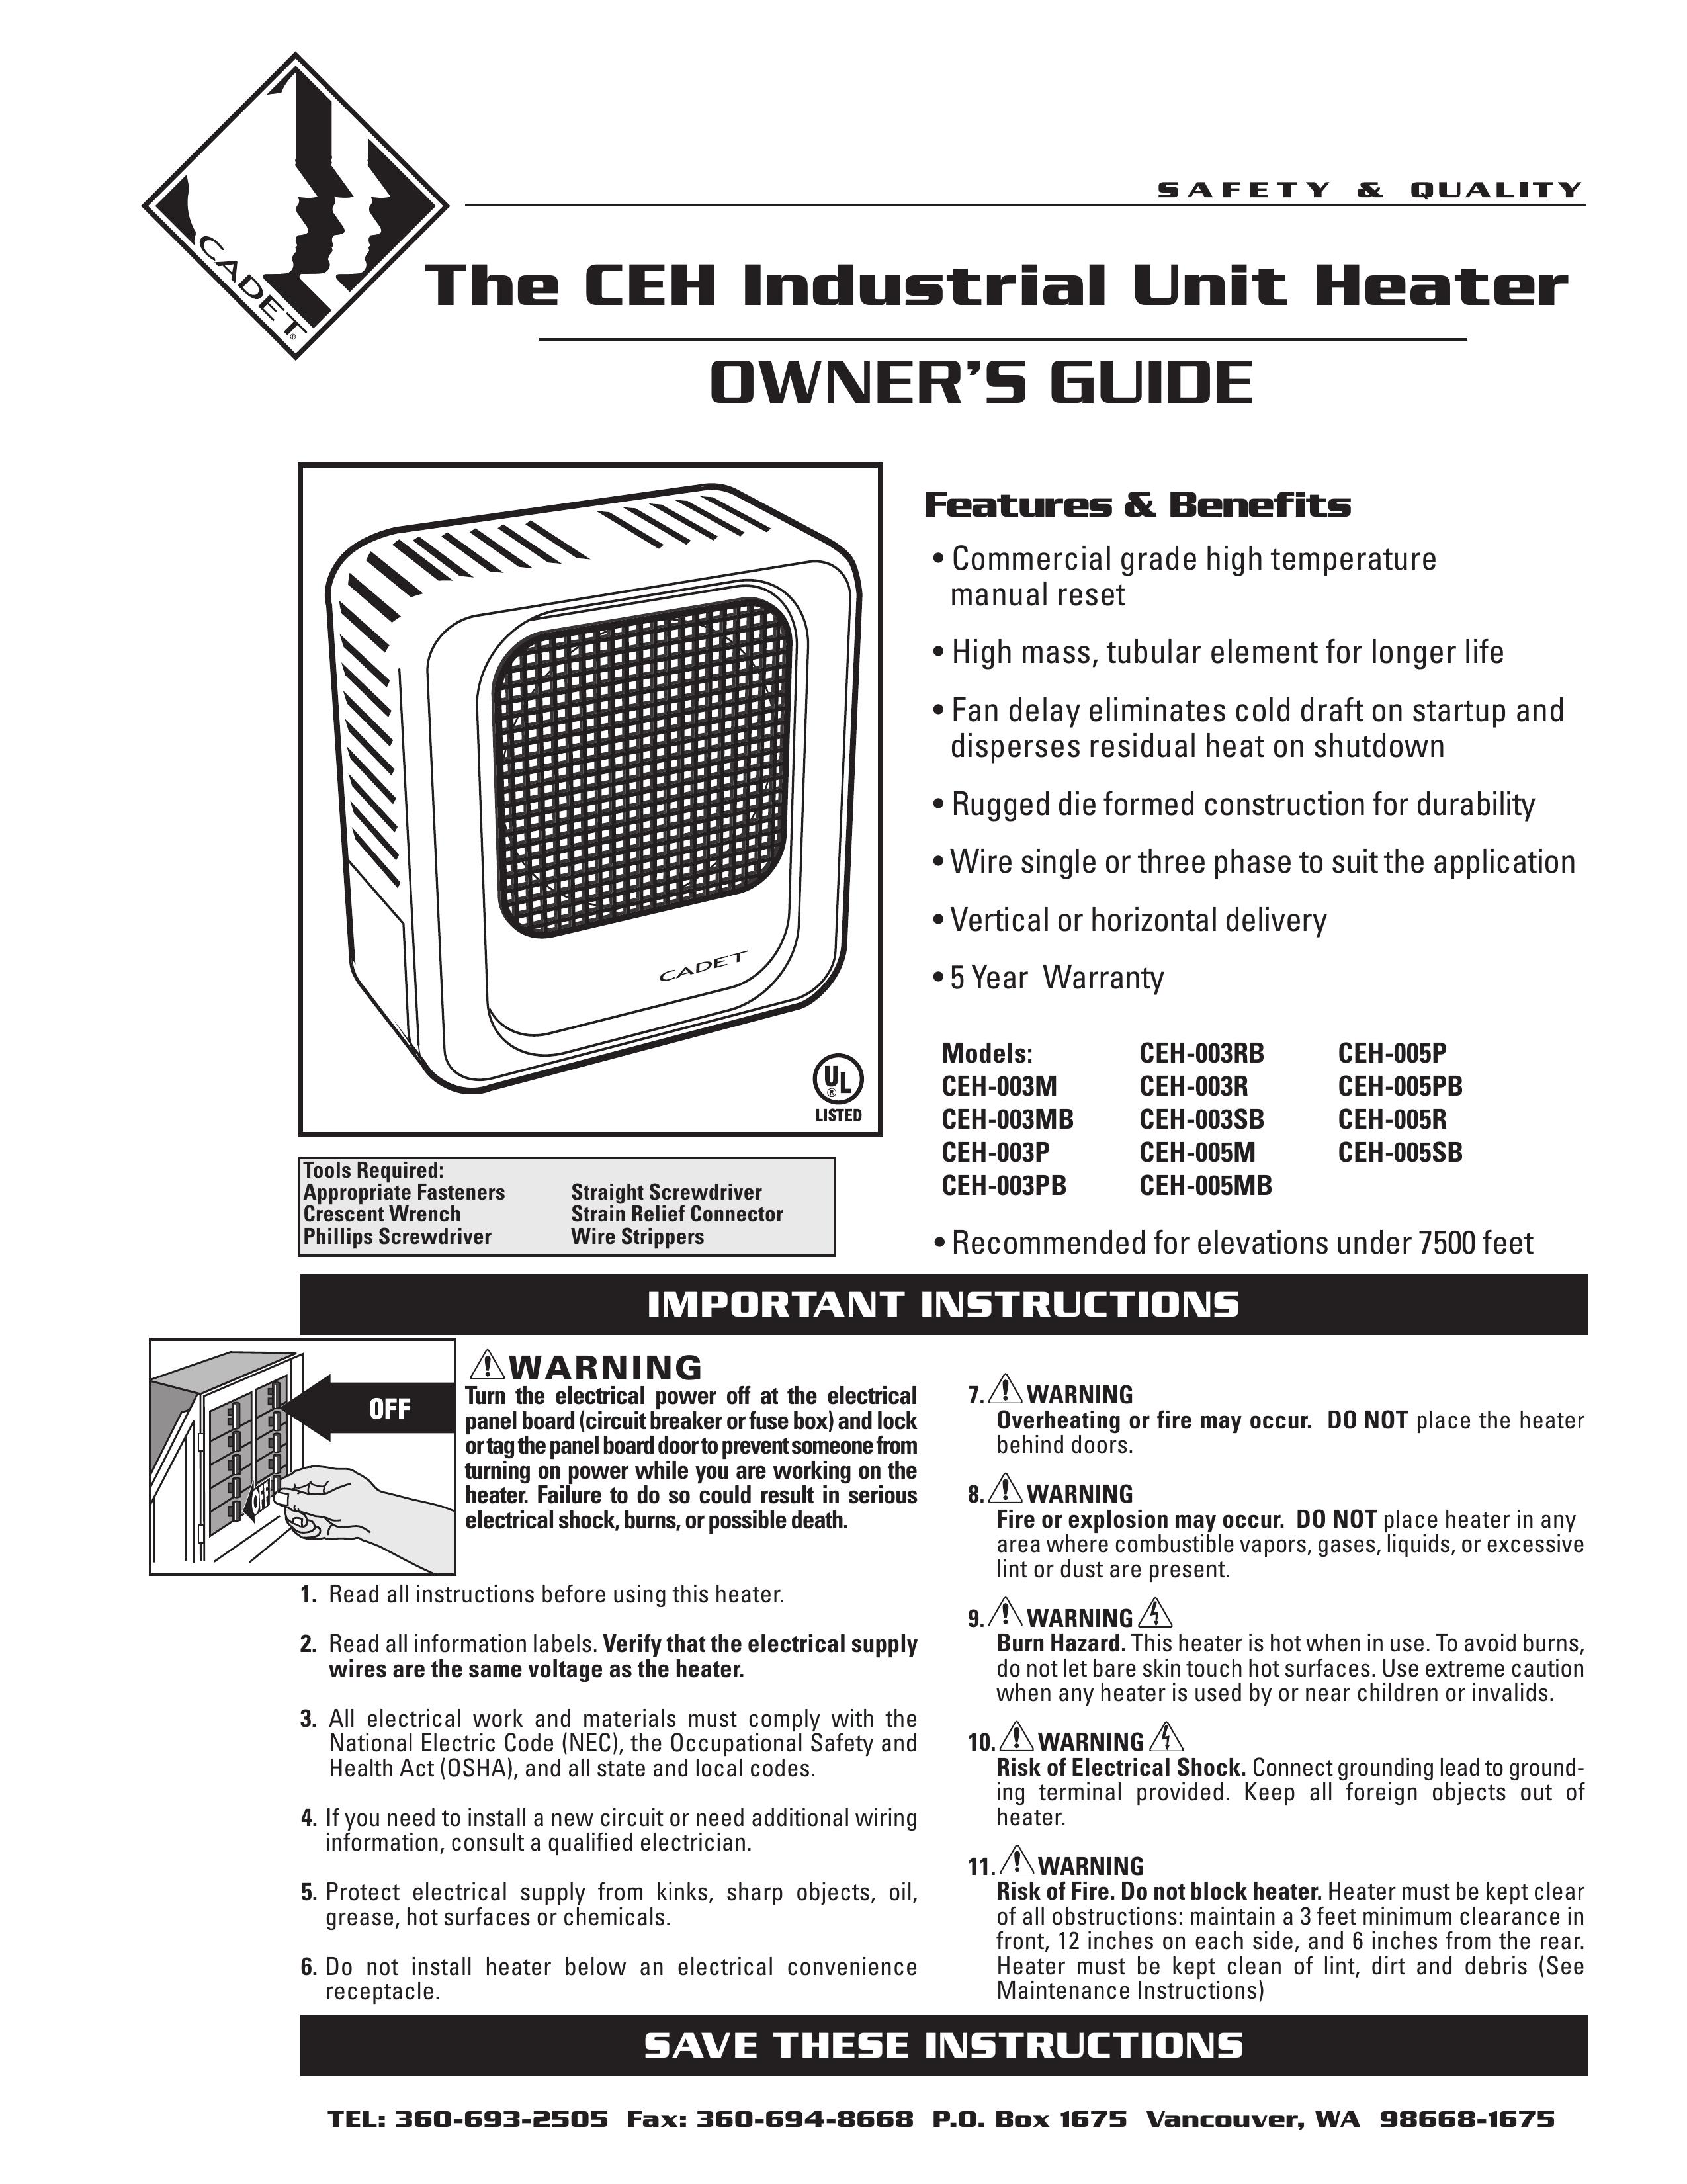 Cadet CEH-003R Patio Heater User Manual